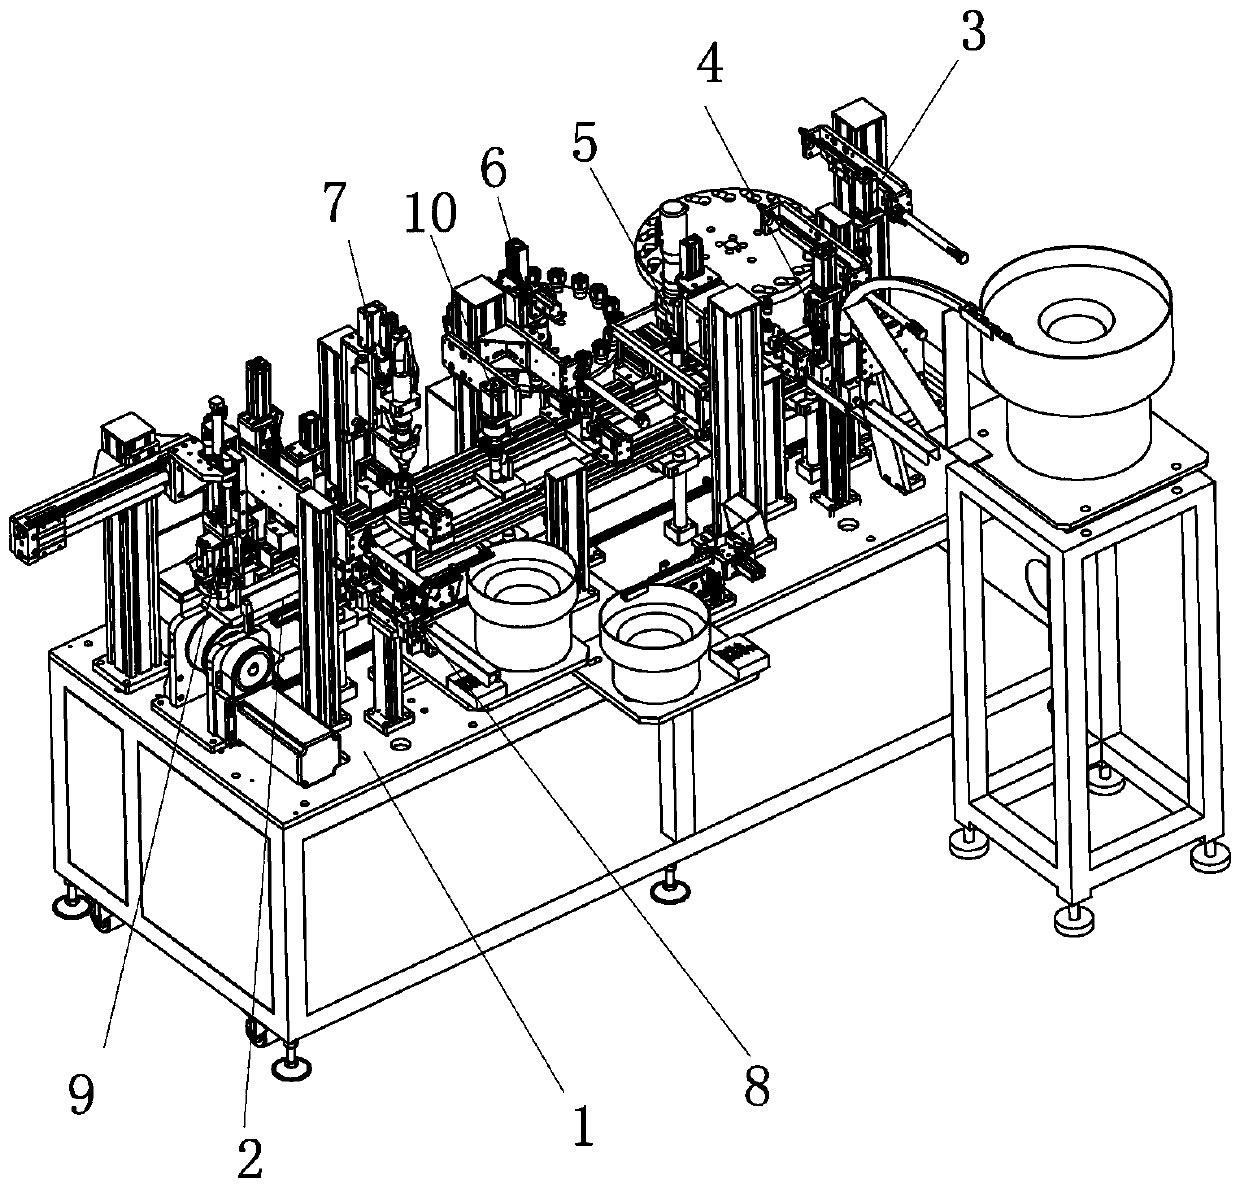 Full automatic angle valve assembly machine